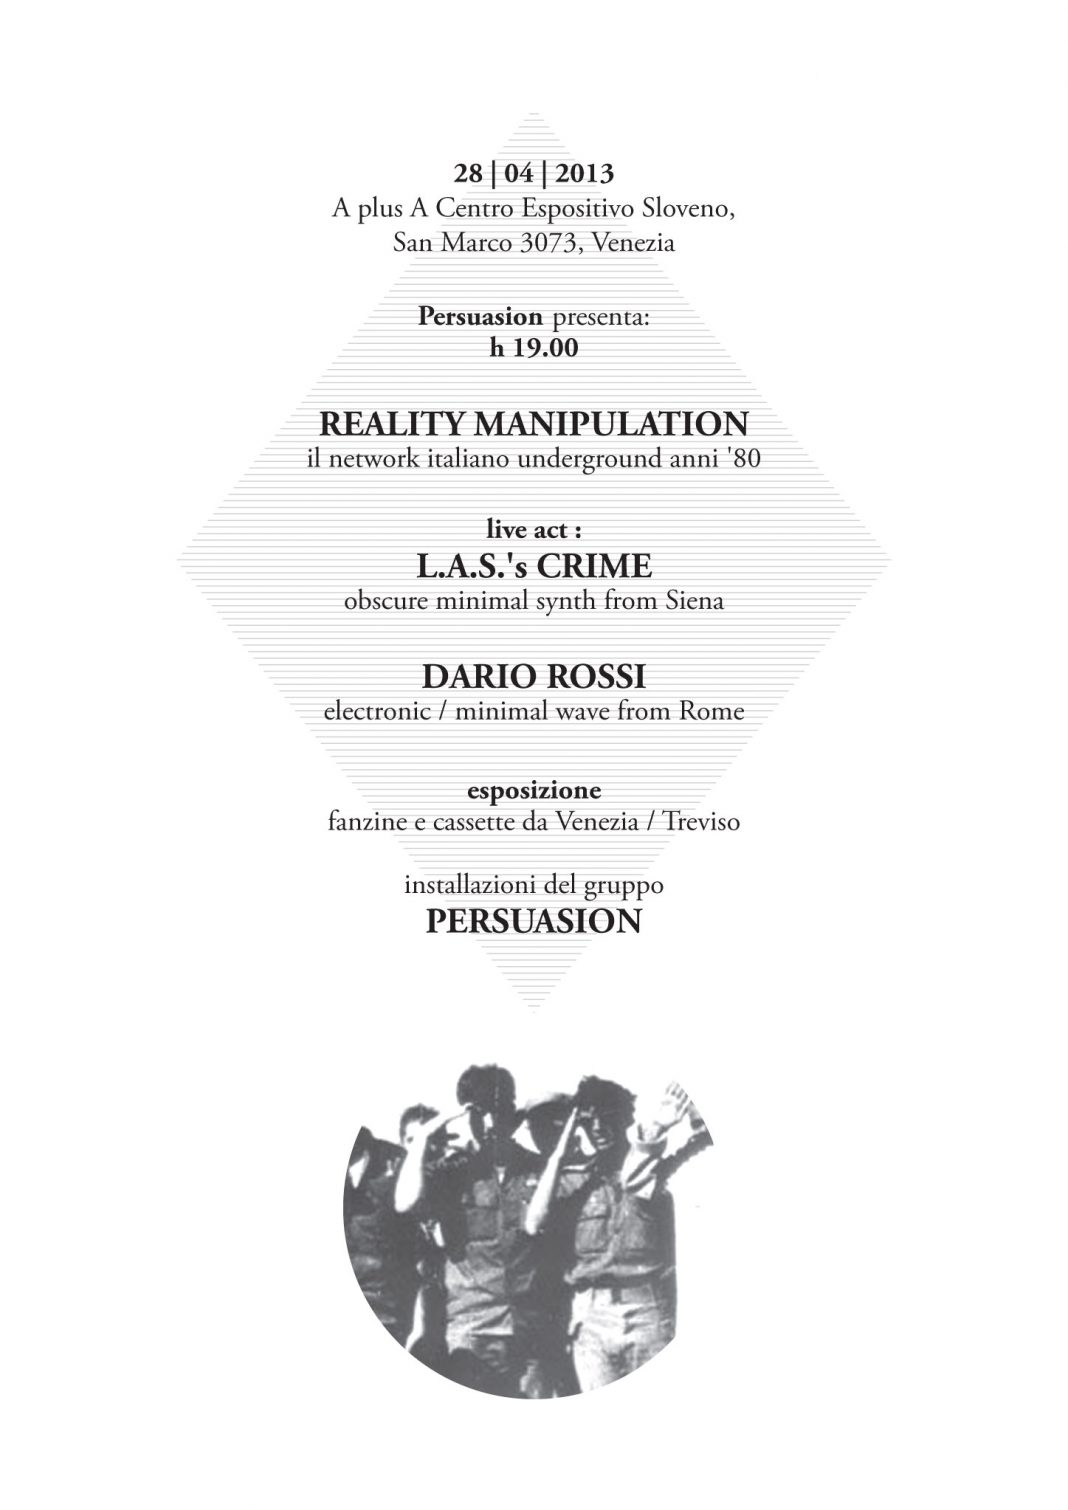 Reality Manipulation presenta: L.A.S.’s Crime / Dario Rossi (music performance)https://www.exibart.com/repository/media/eventi/2013/04/reality-manipulation-presenta-l.a.s.8217s-crime-dario-rossi-music-performance-1068x1510.jpg